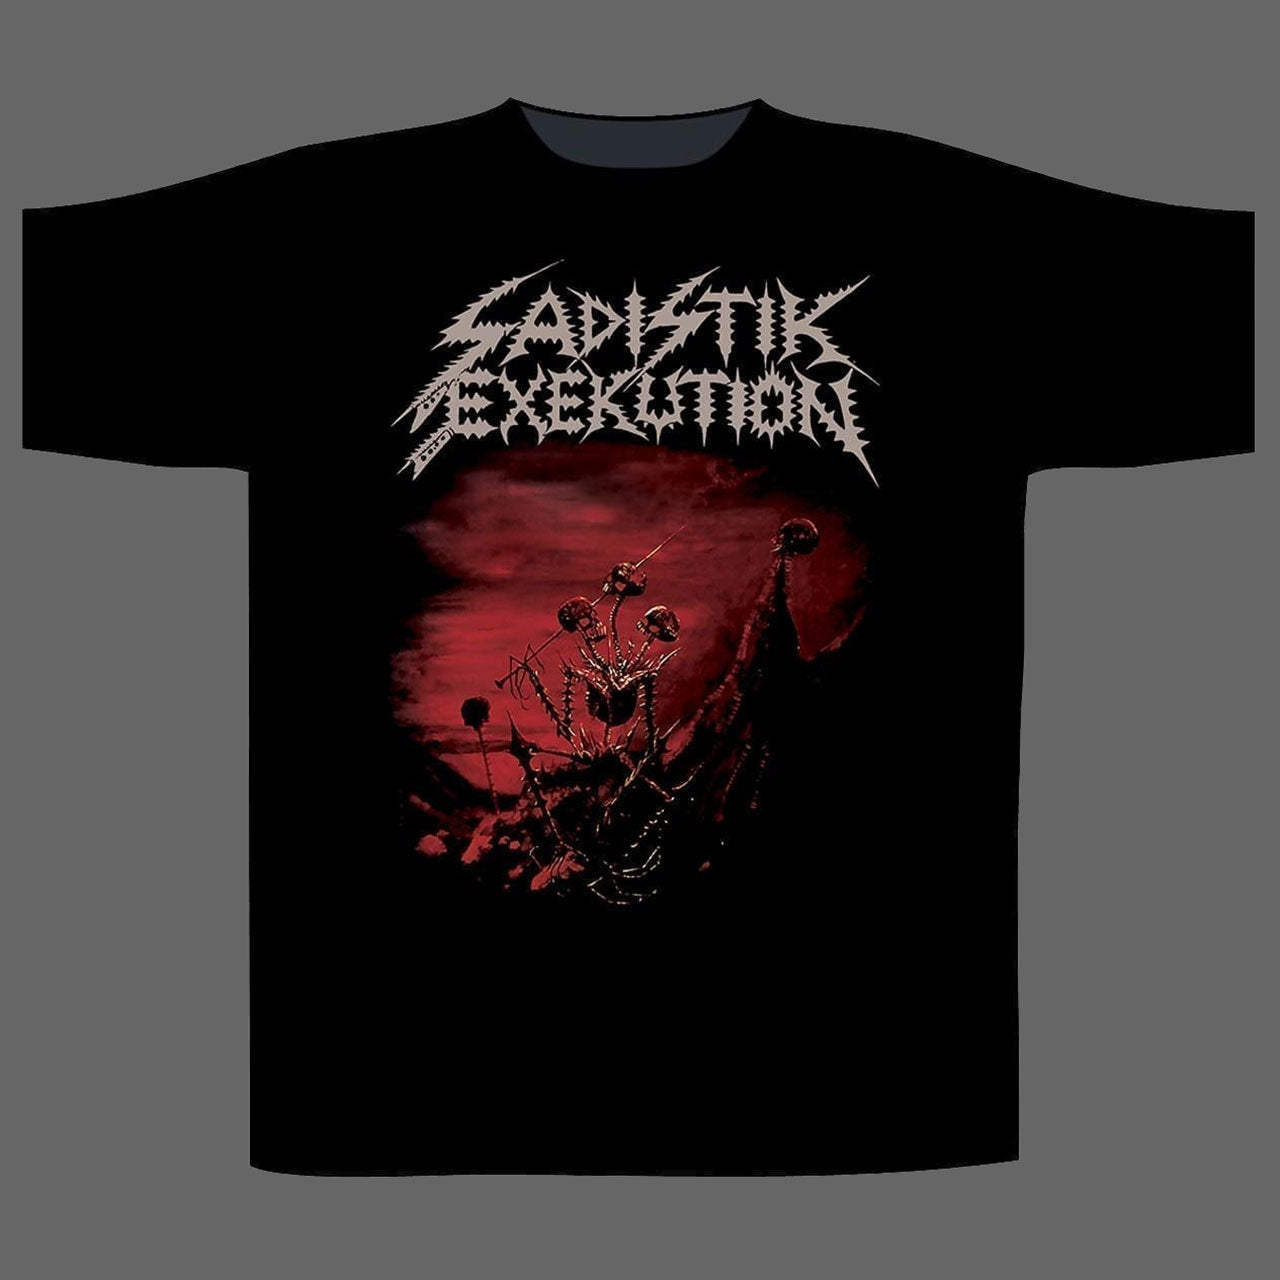 Sadistik Exekution - We are Death... Fukk You (2021) (T-Shirt)